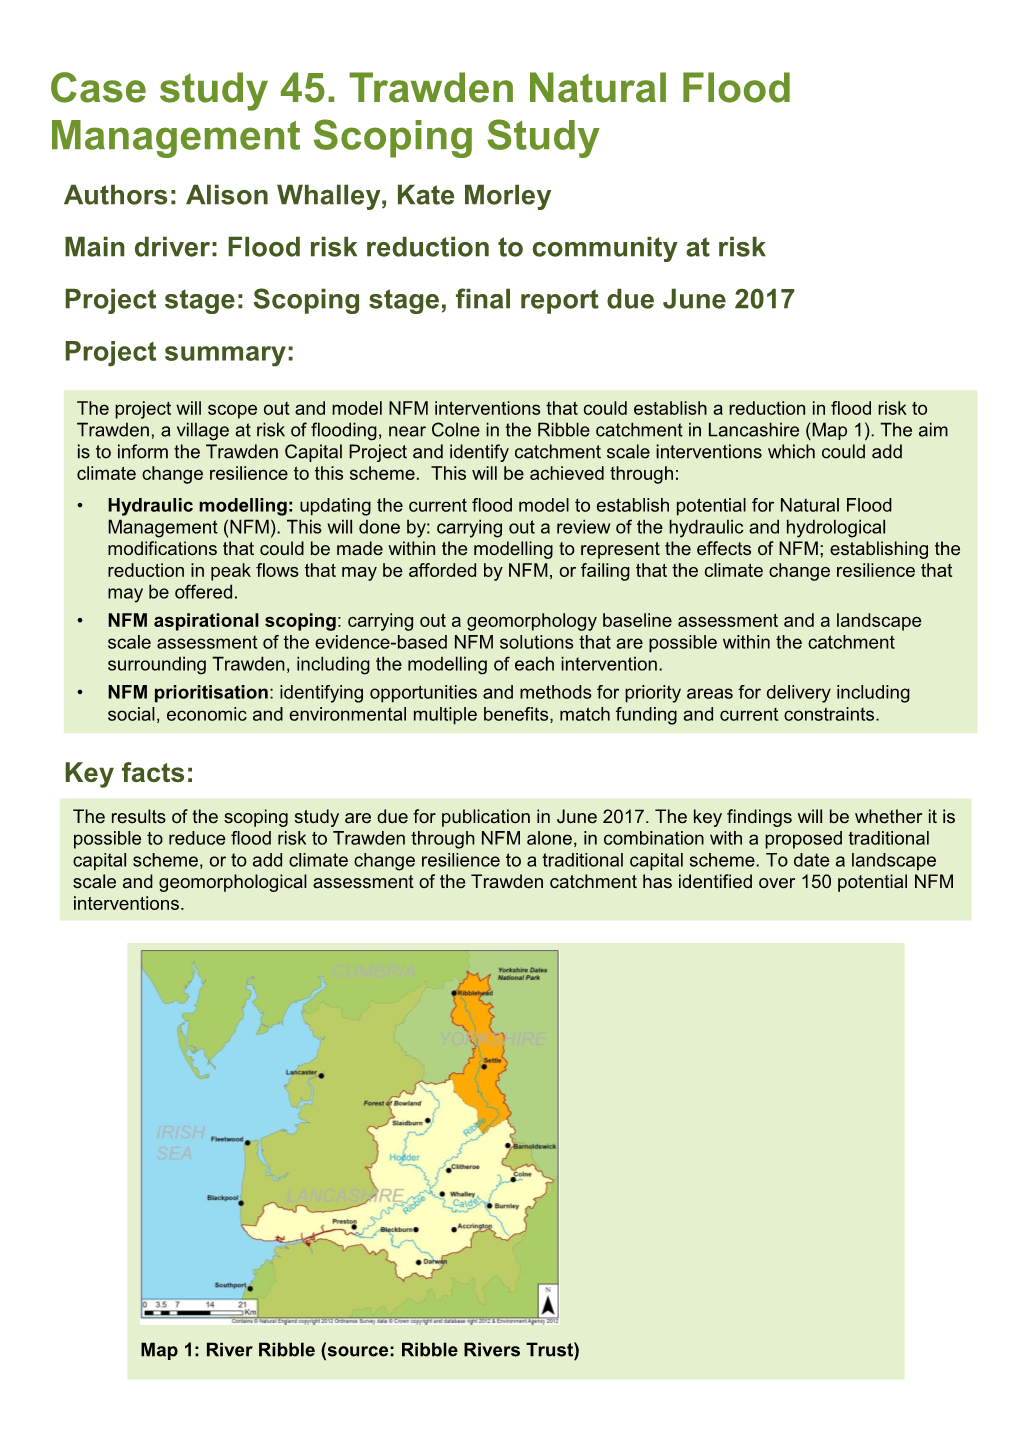 Case Study 45. Trawden Natural Flood Management Scoping Study